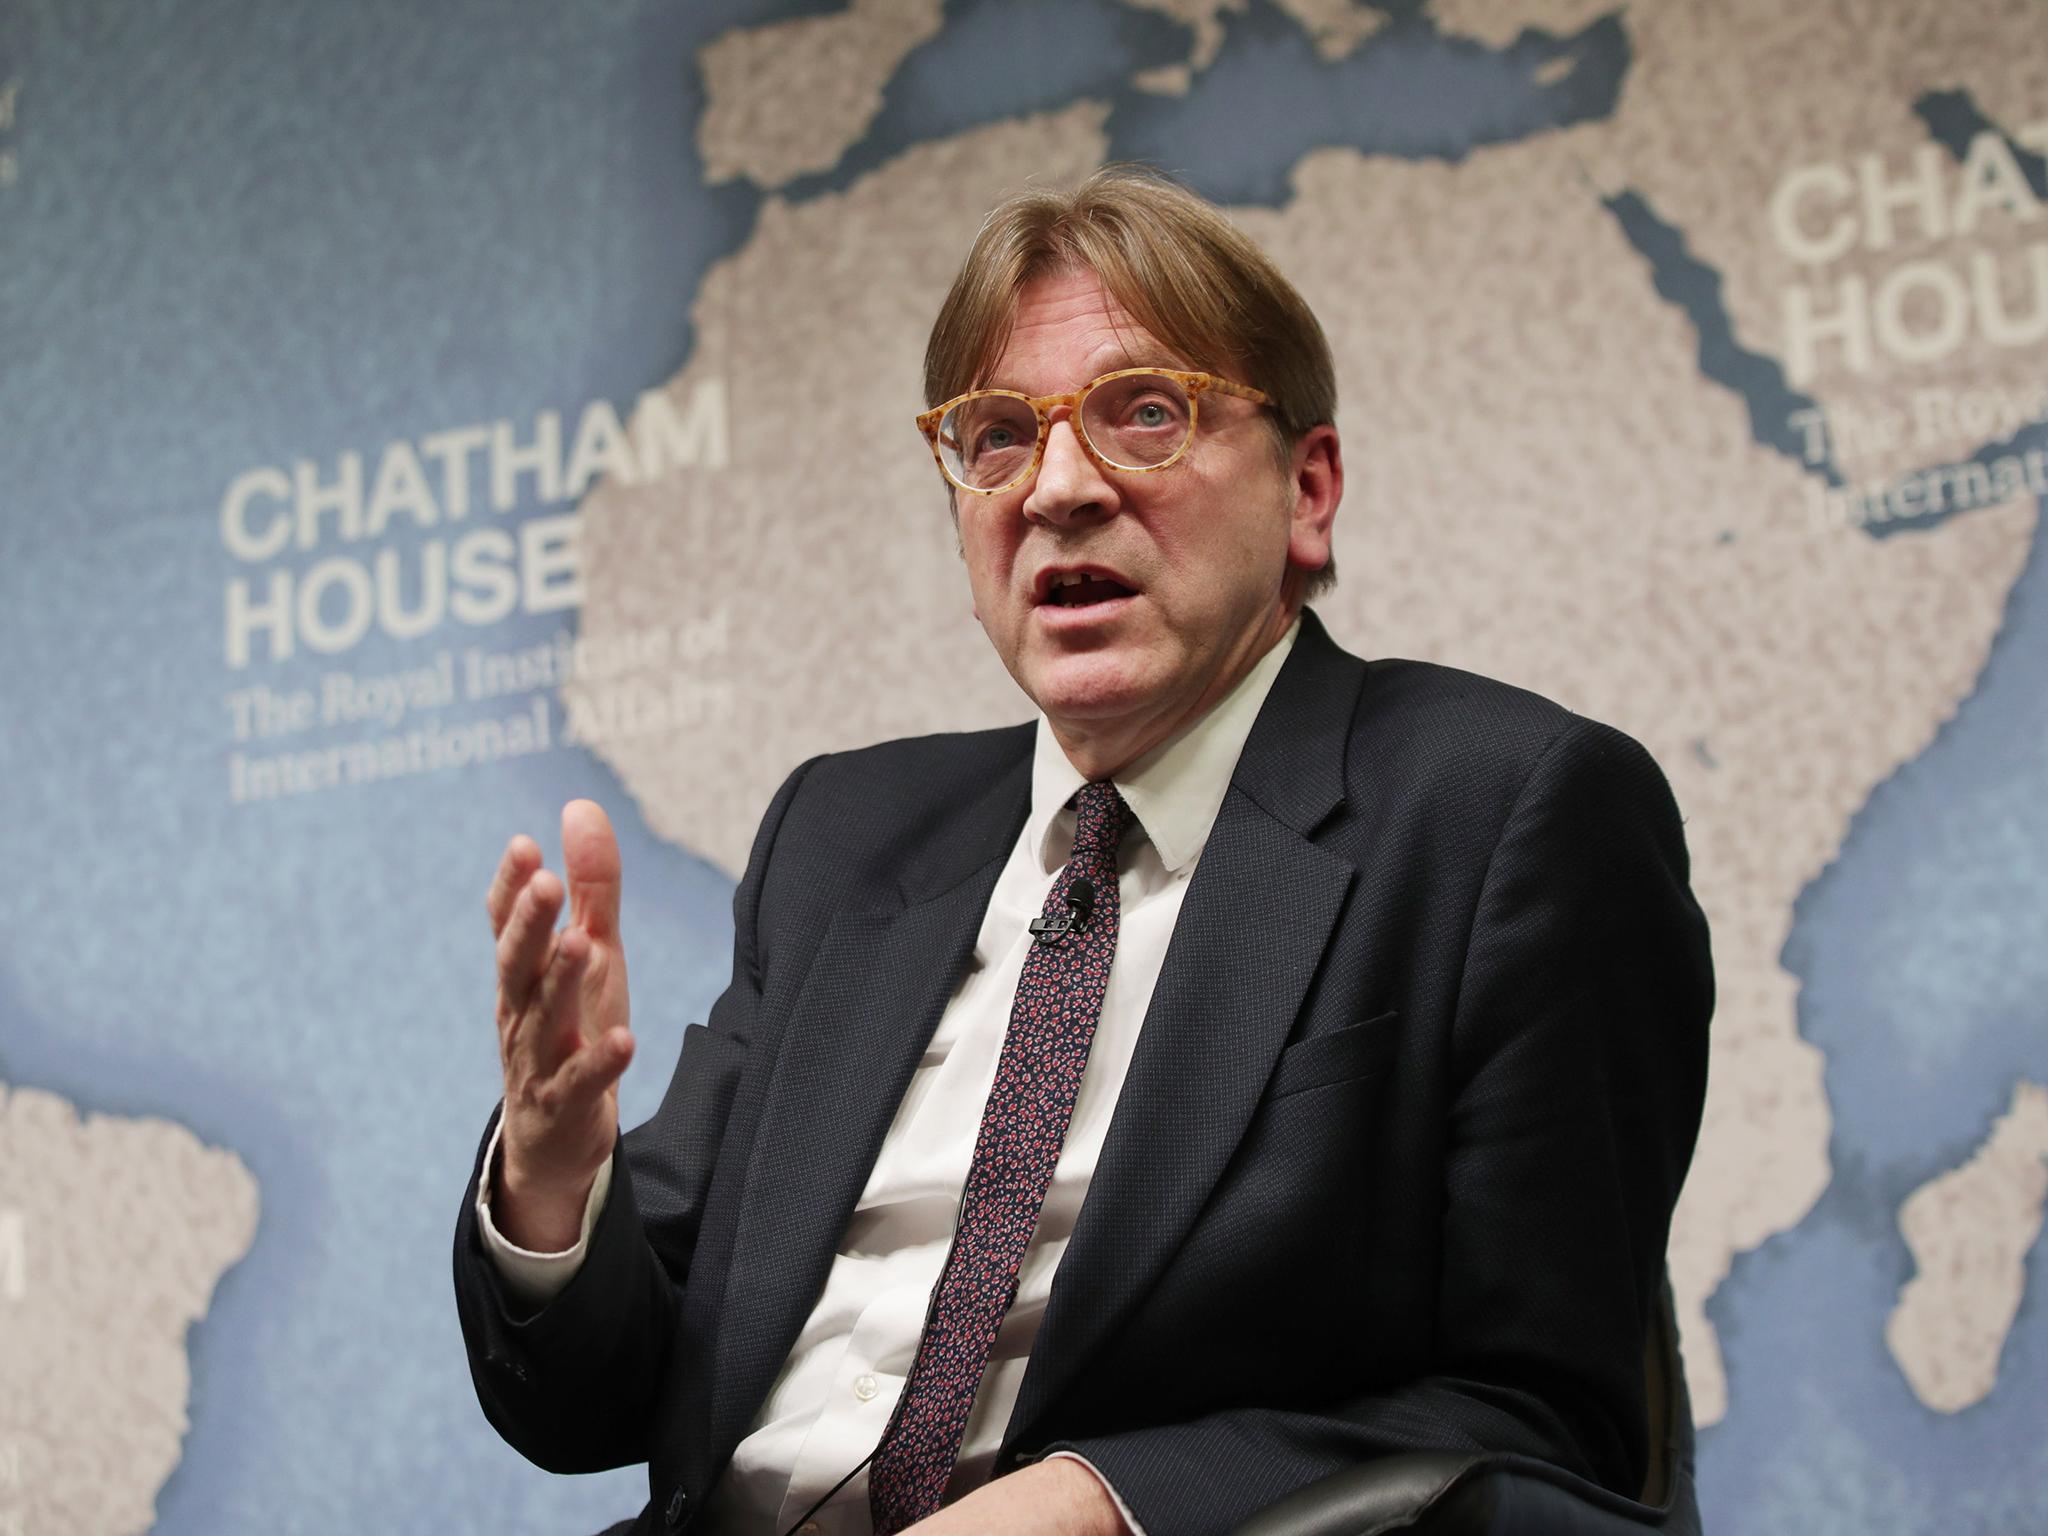 Guy Verhofstadt, the European Parliament's chief Brexit negotiator